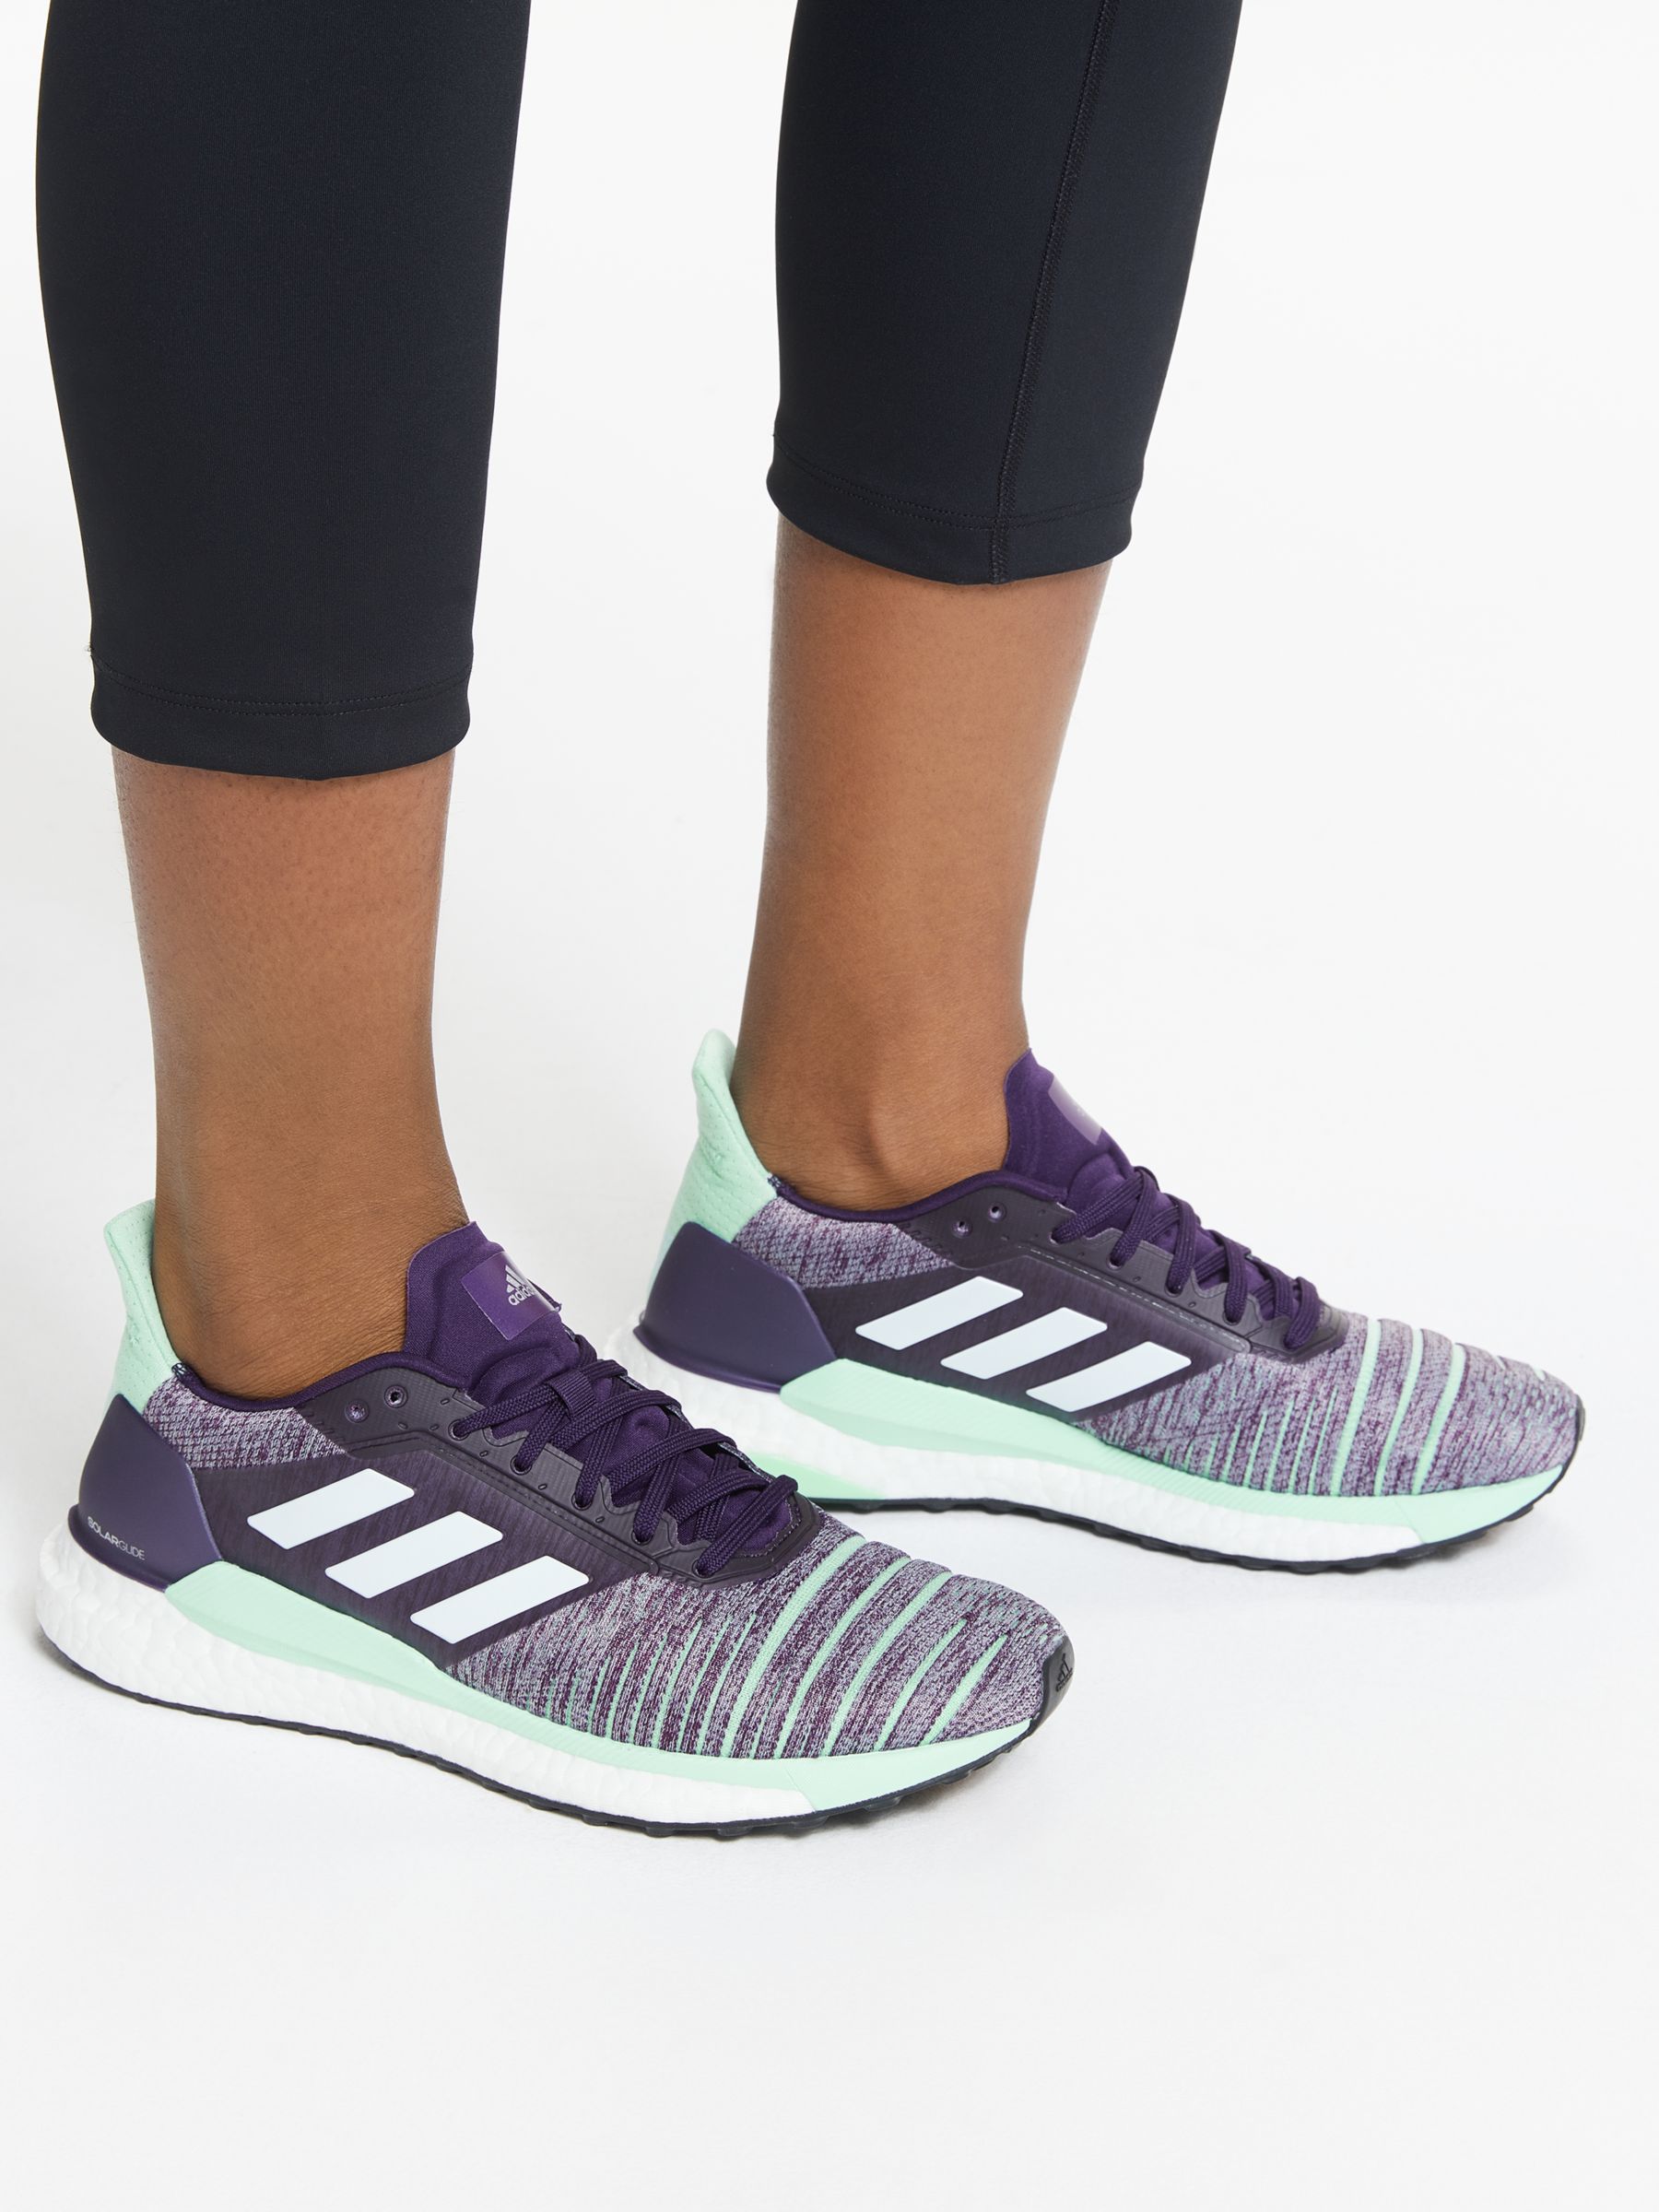 adidas solar glide ladies running shoes